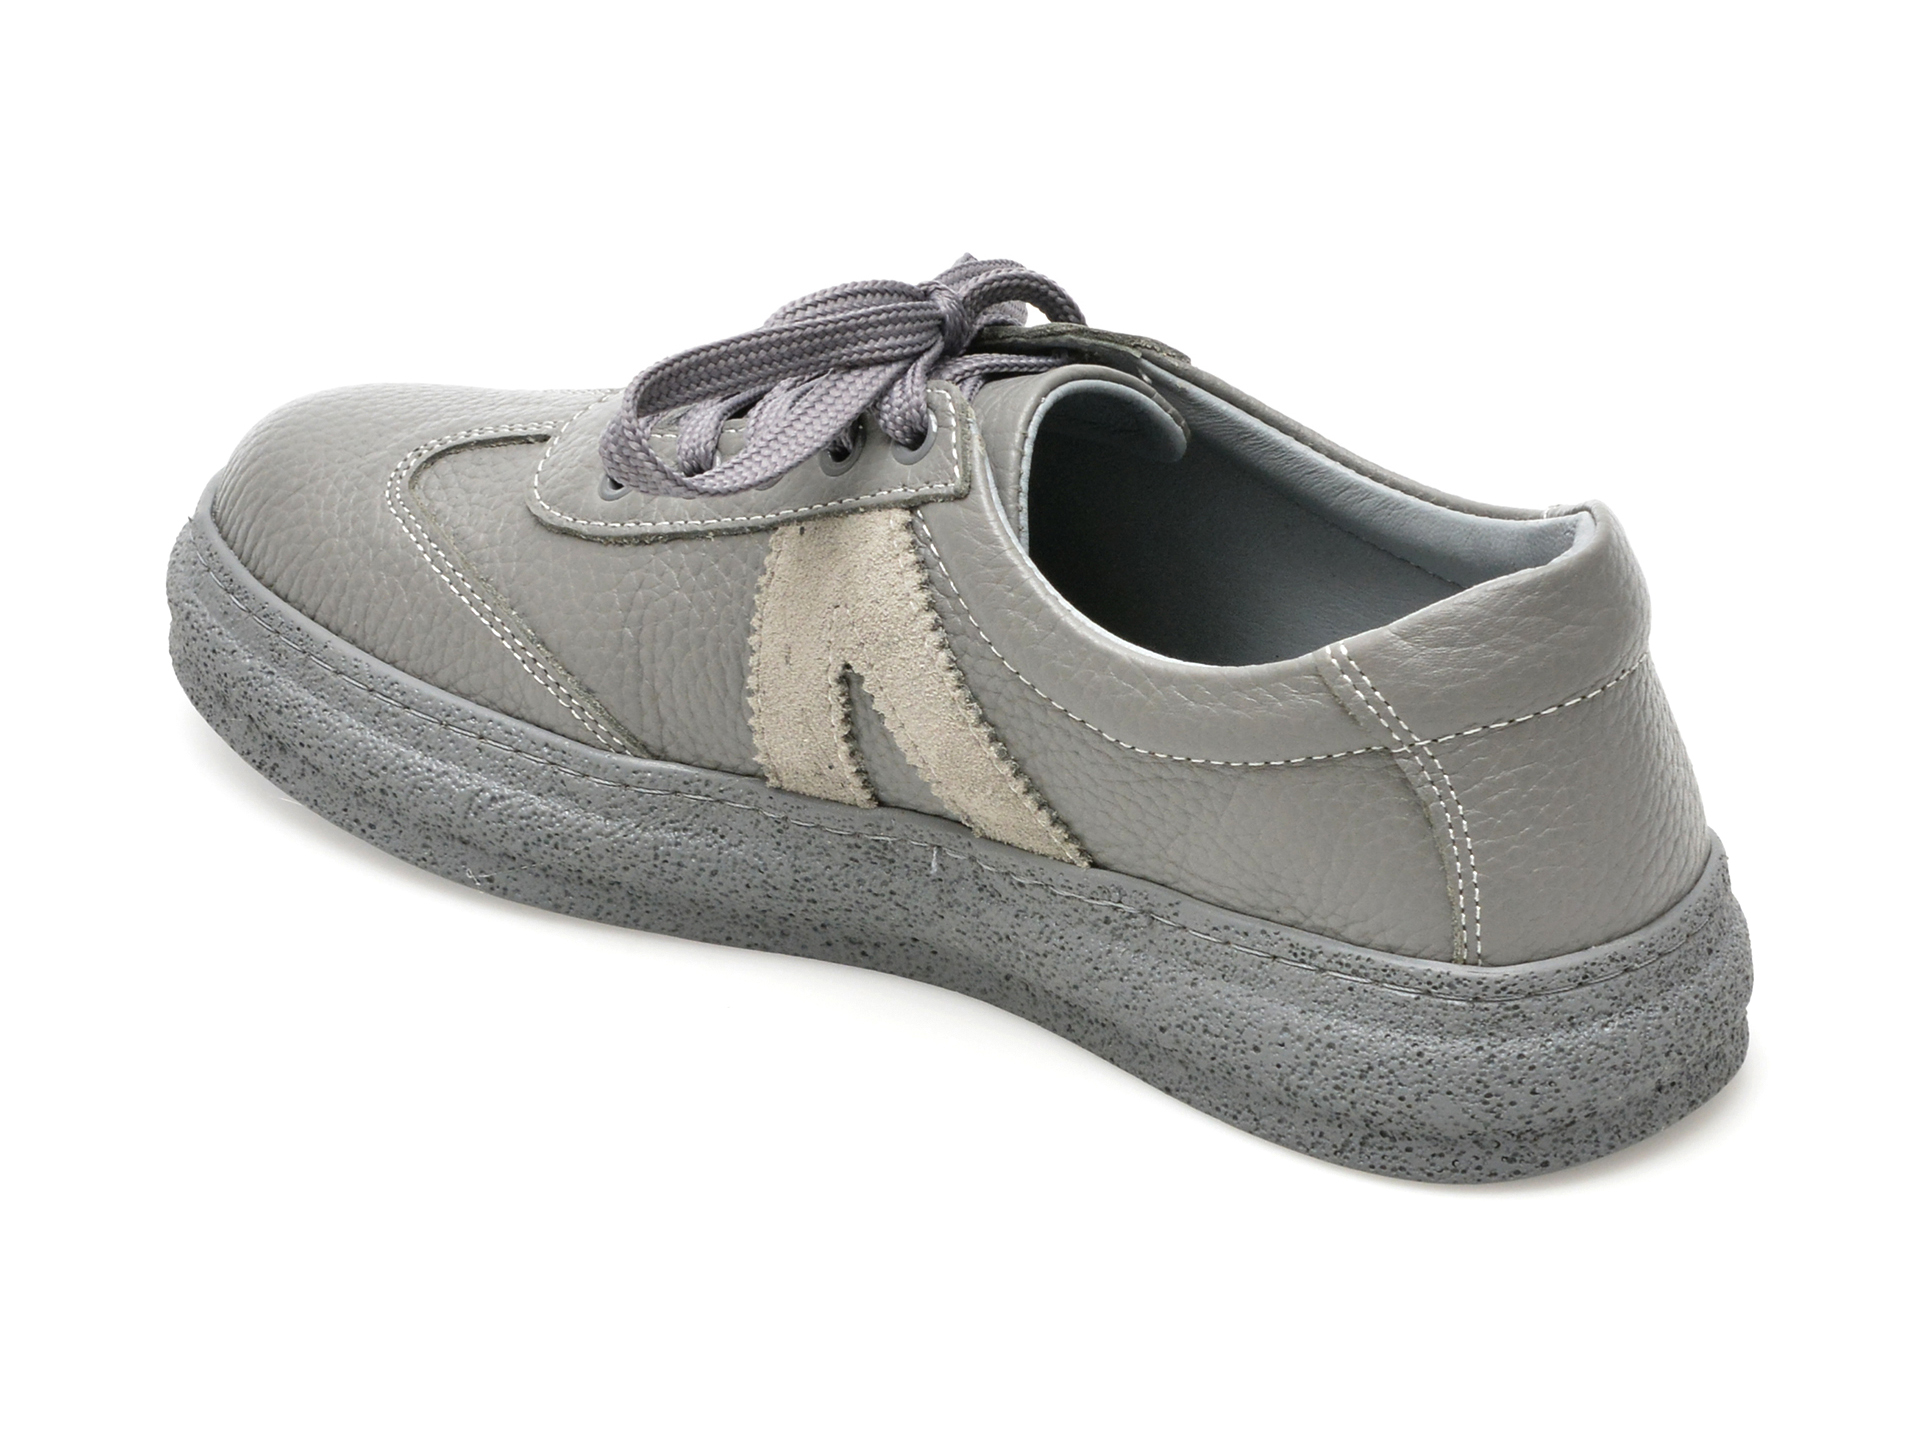 Poze Pantofi FLAVIA PASSINI gri, 3513029, din piele naturala